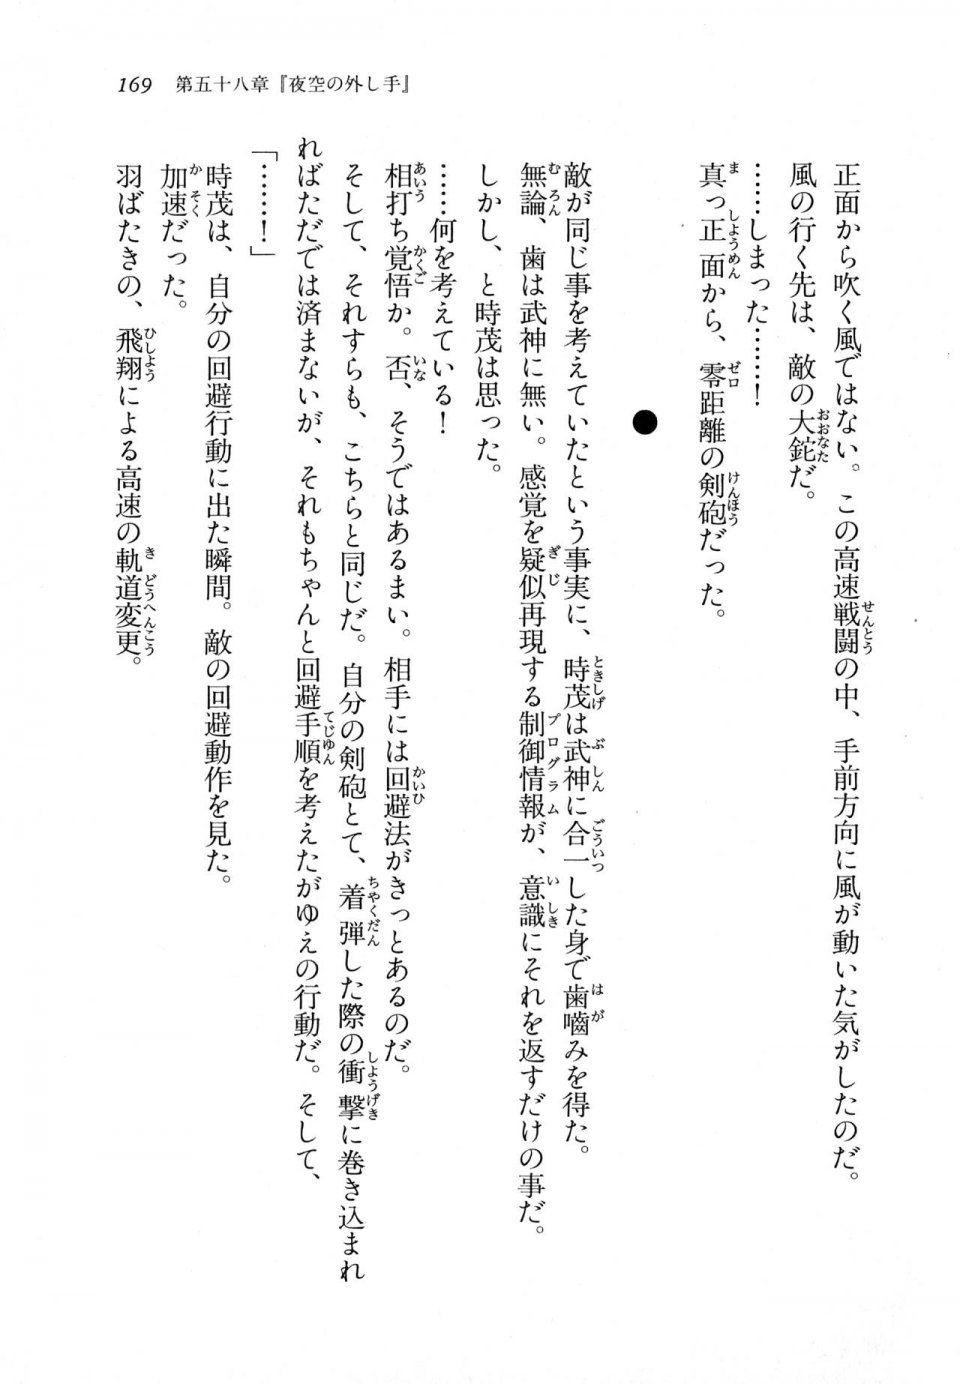 Kyoukai Senjou no Horizon LN Vol 18(7C) Part 1 - Photo #169